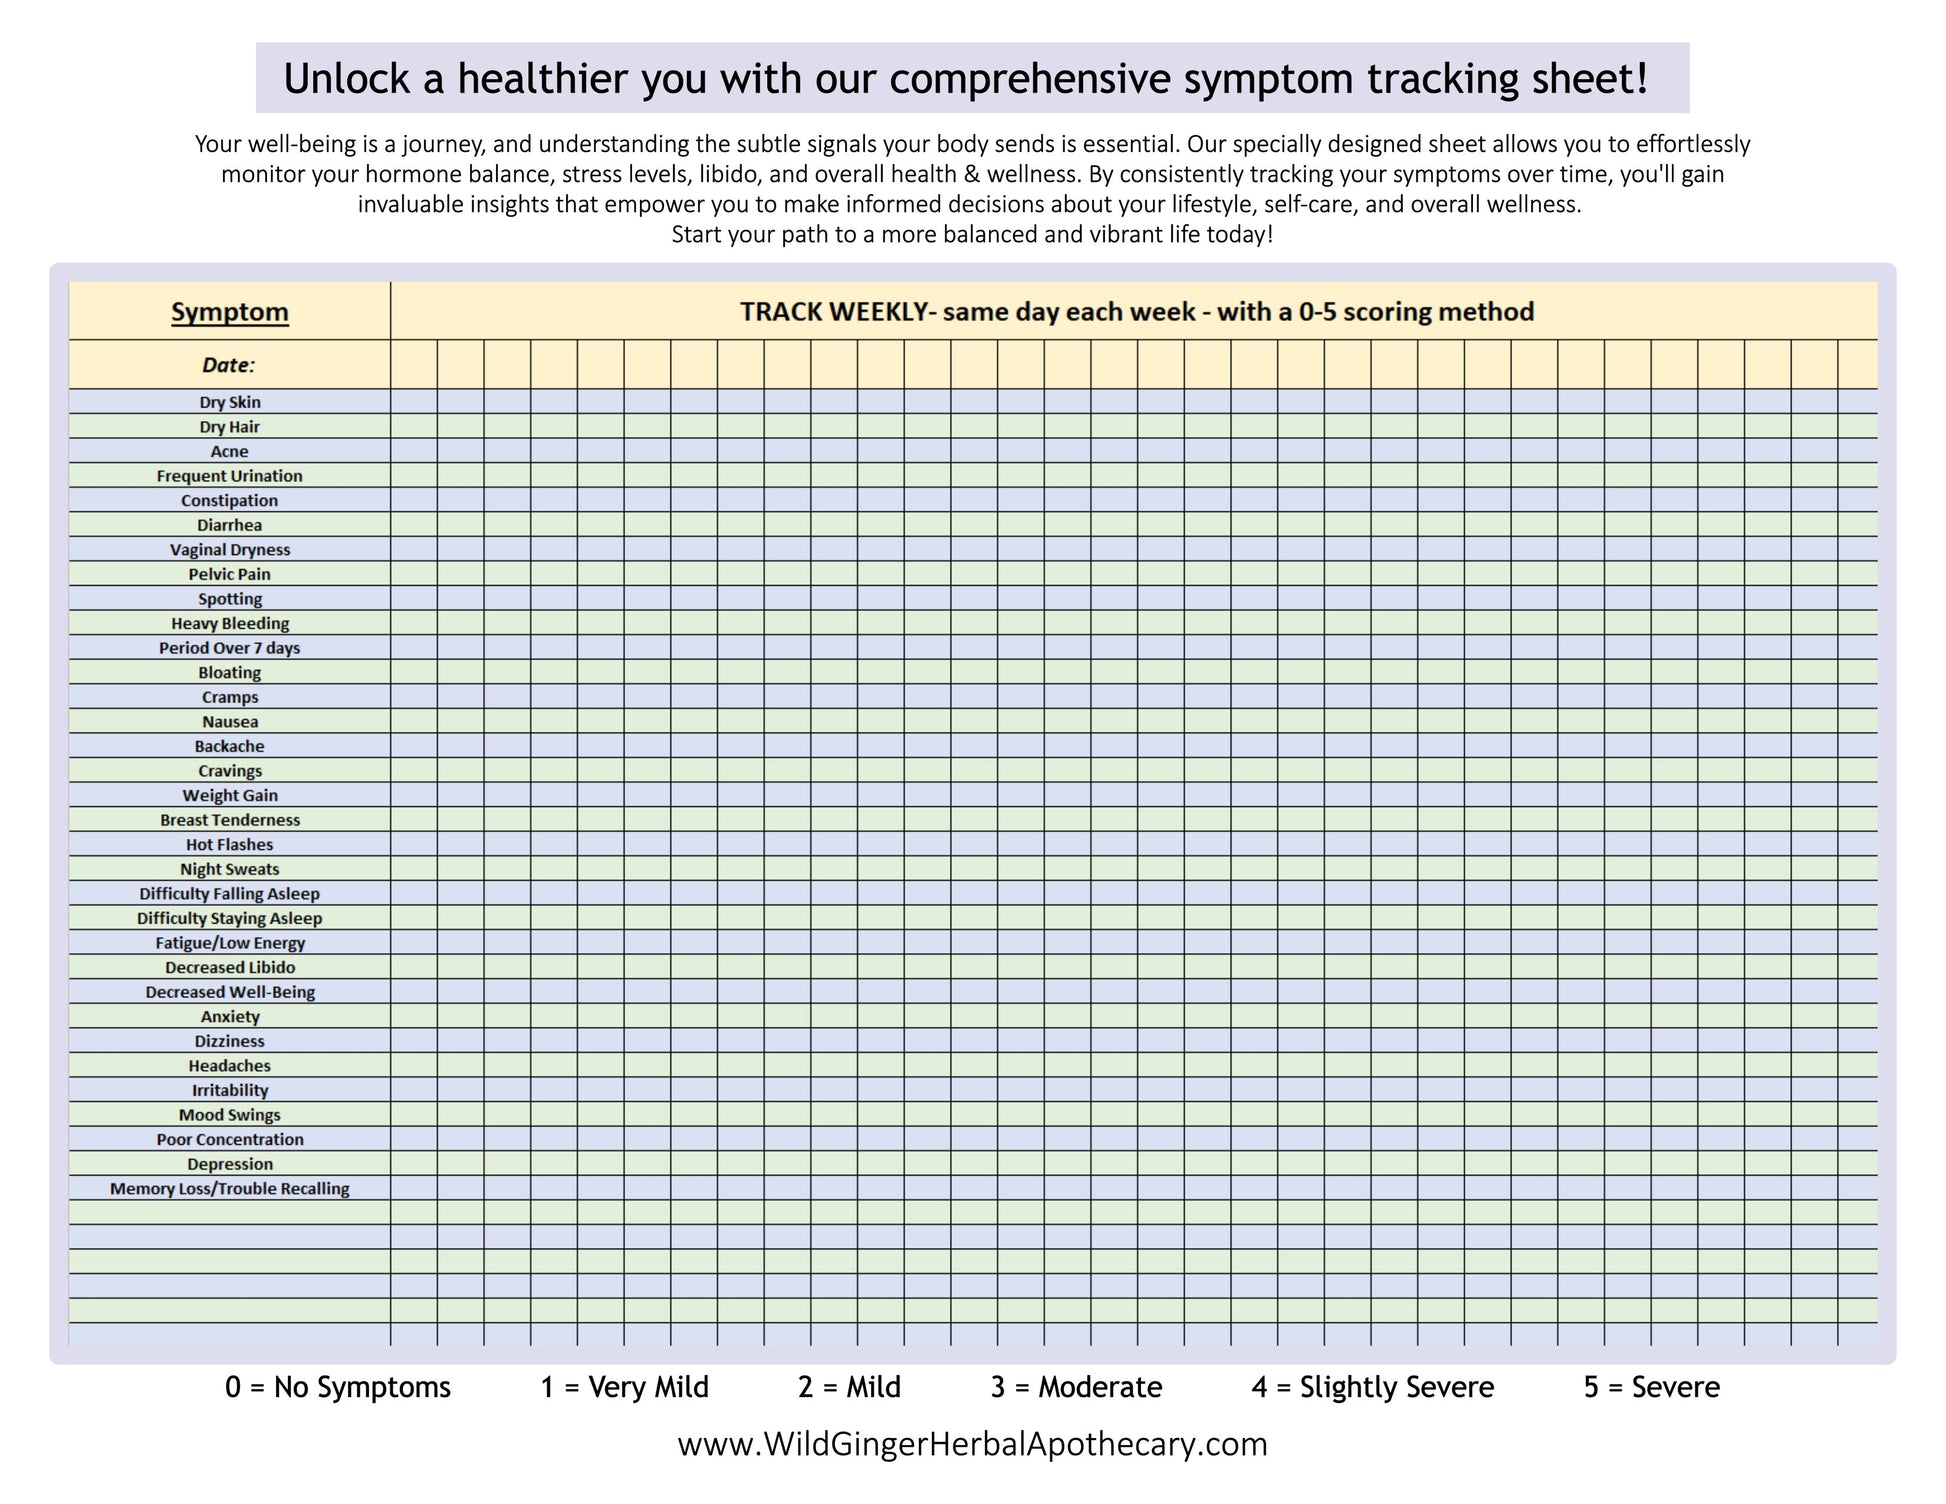 Symptom tracking sheet